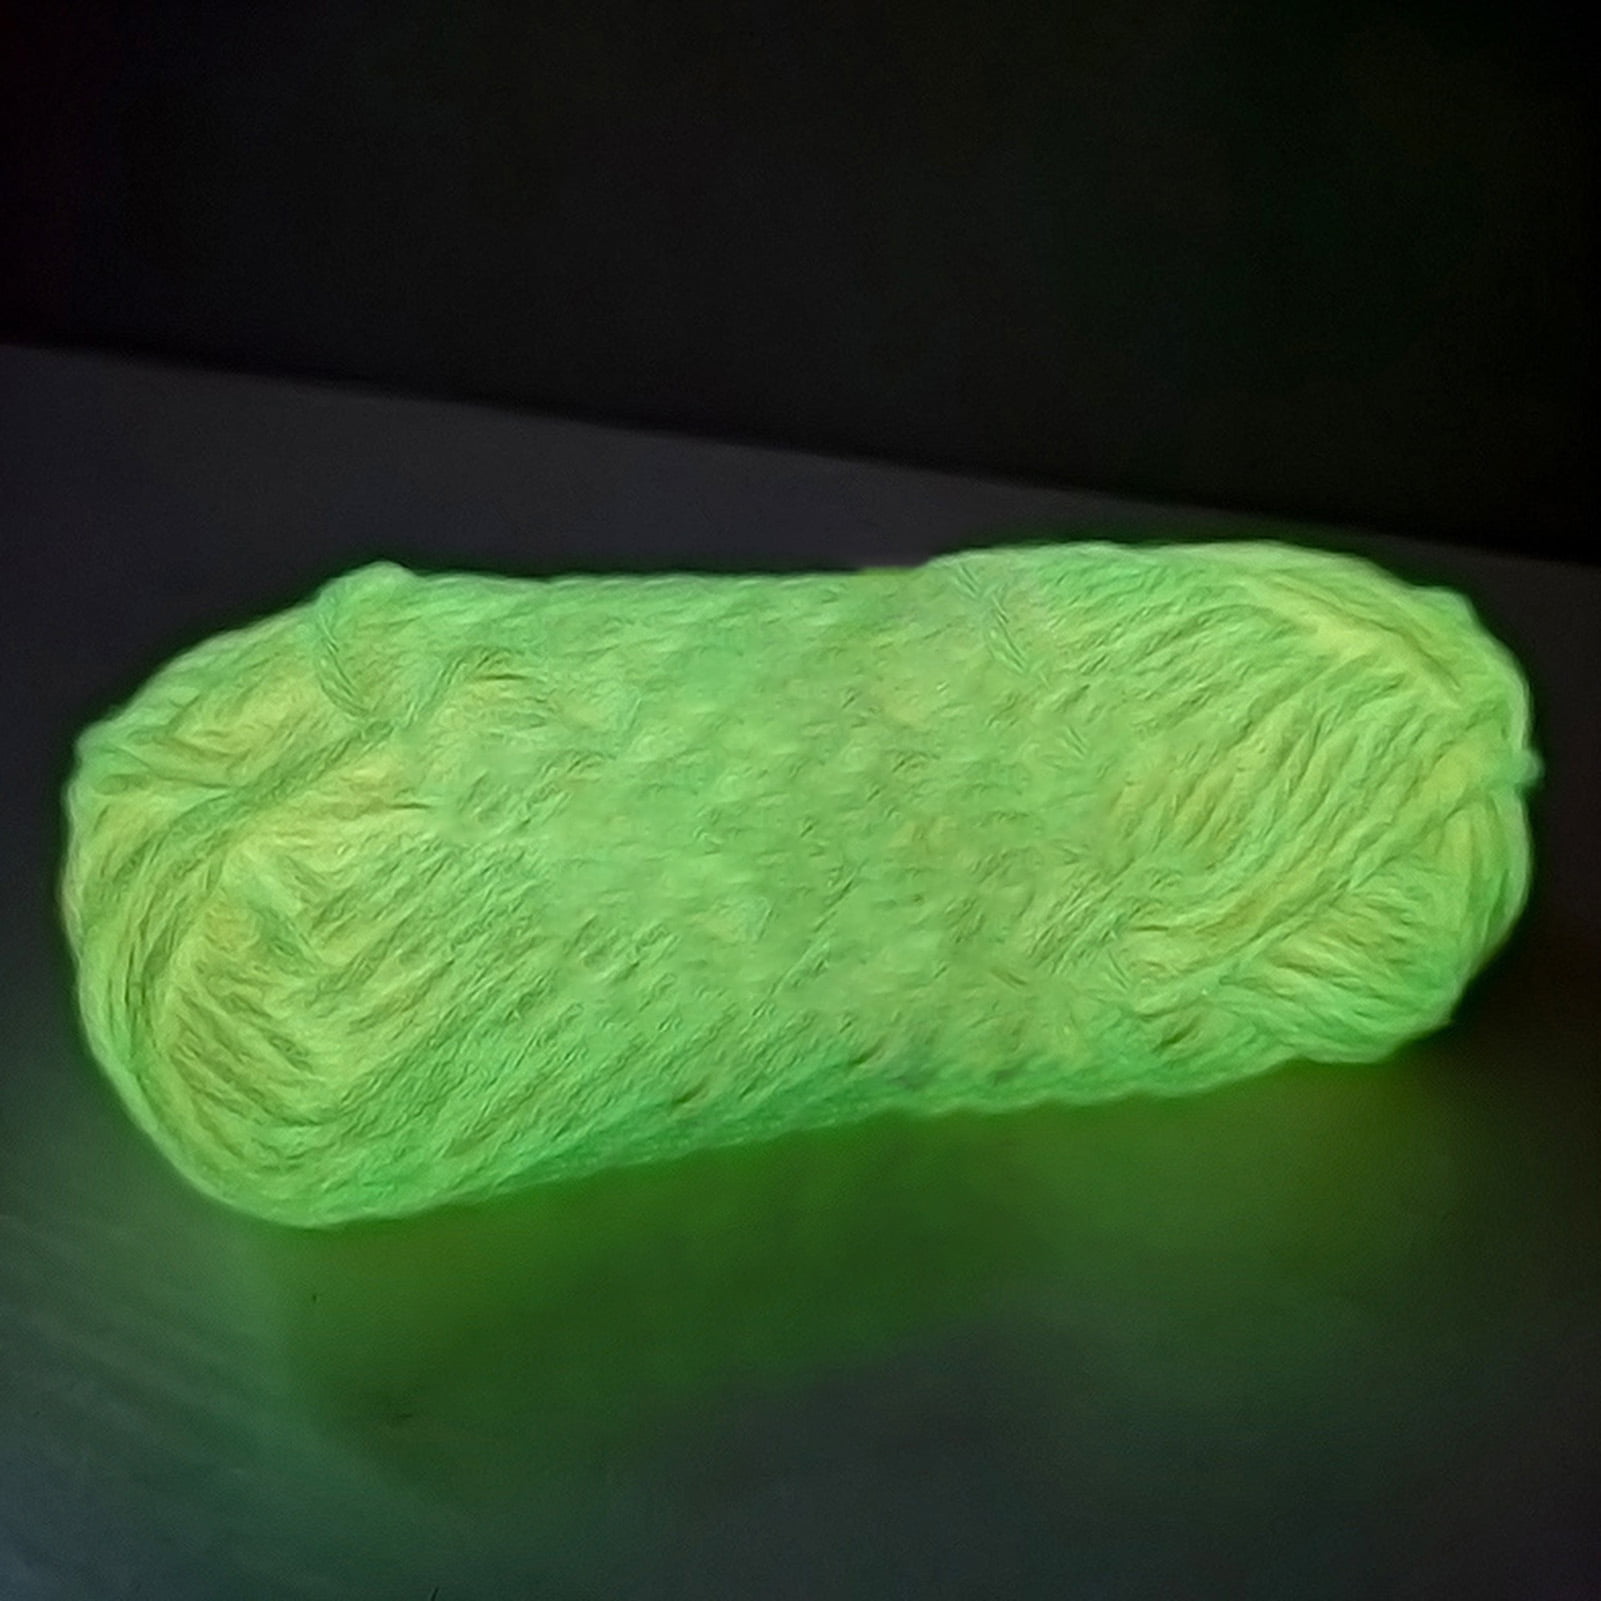 5 Rolls Glow in the Dark Yarn Luminous Knitting Crochet Yarn for Crocheting  DIY Glow Fingering Weight Yarn for DIY Arts Crafts -  Norway